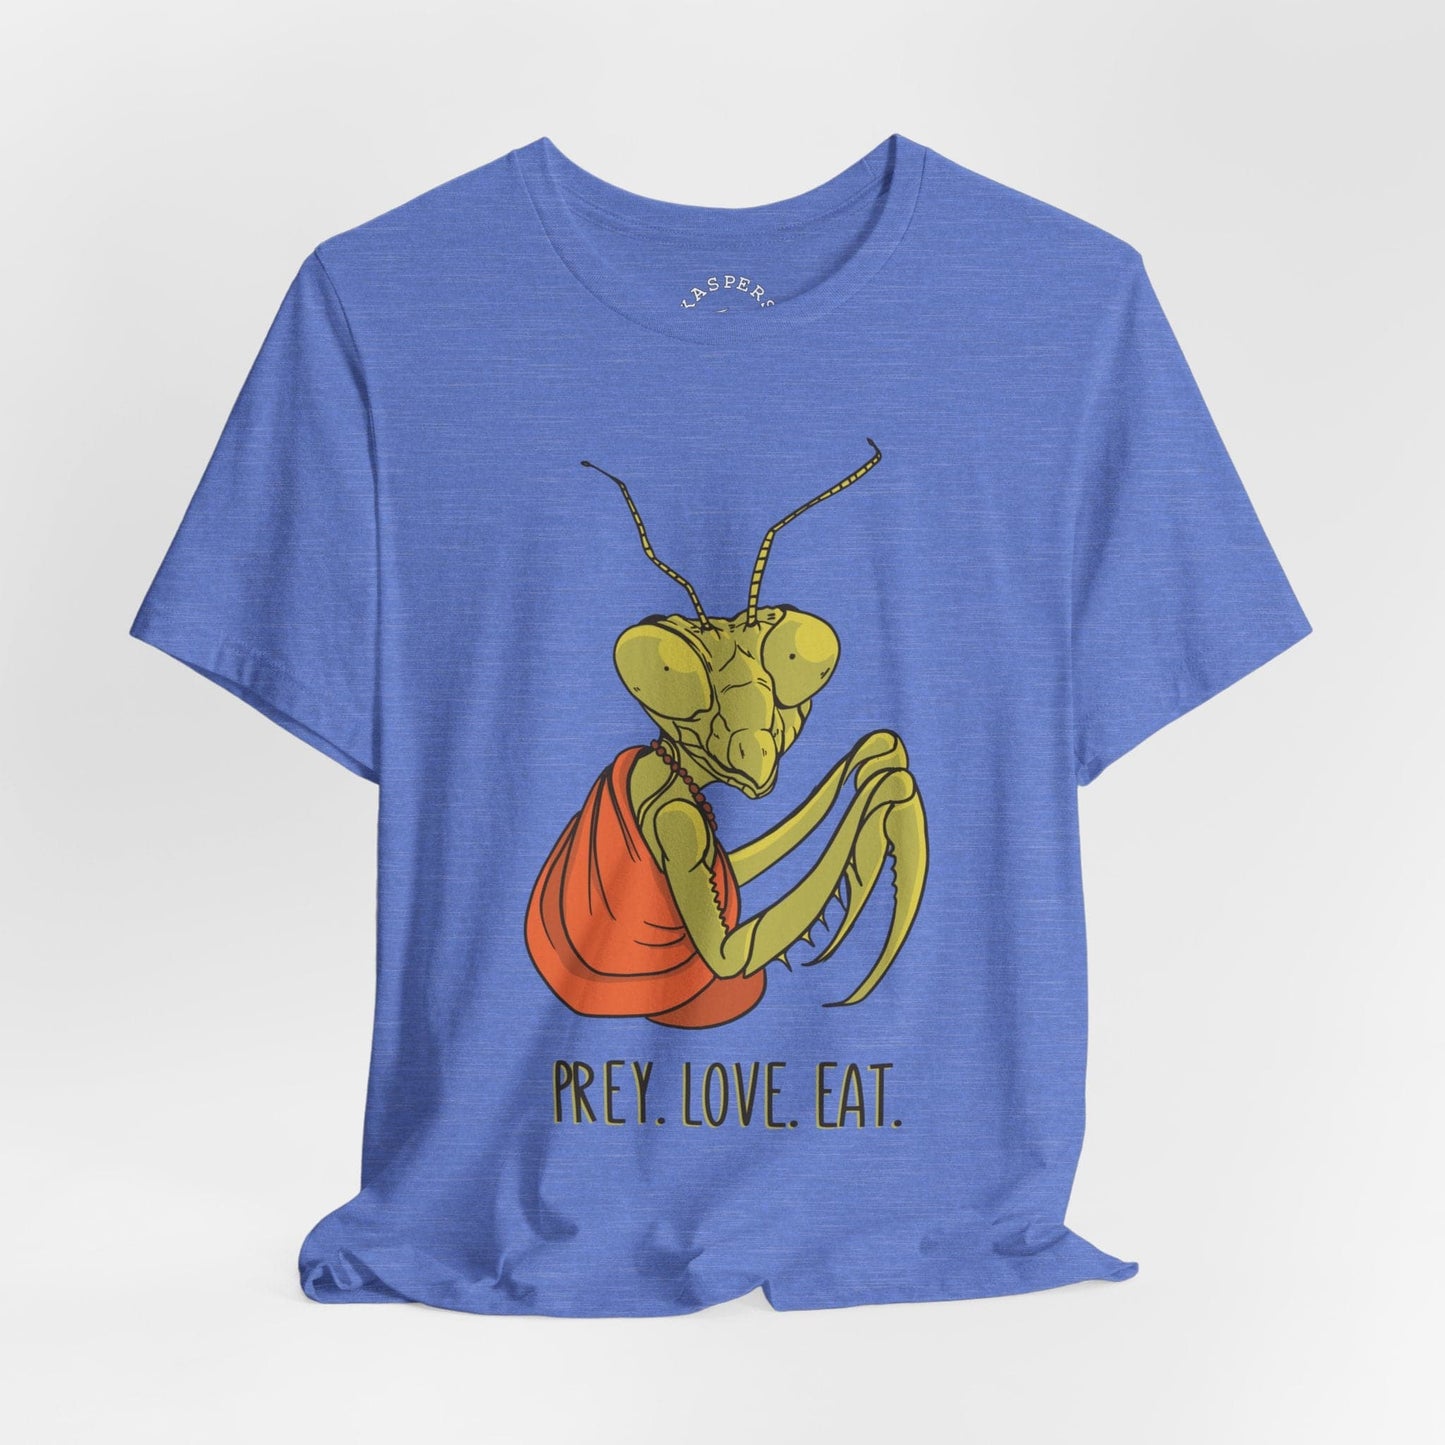 Prey. Love. Eat. T-Shirt